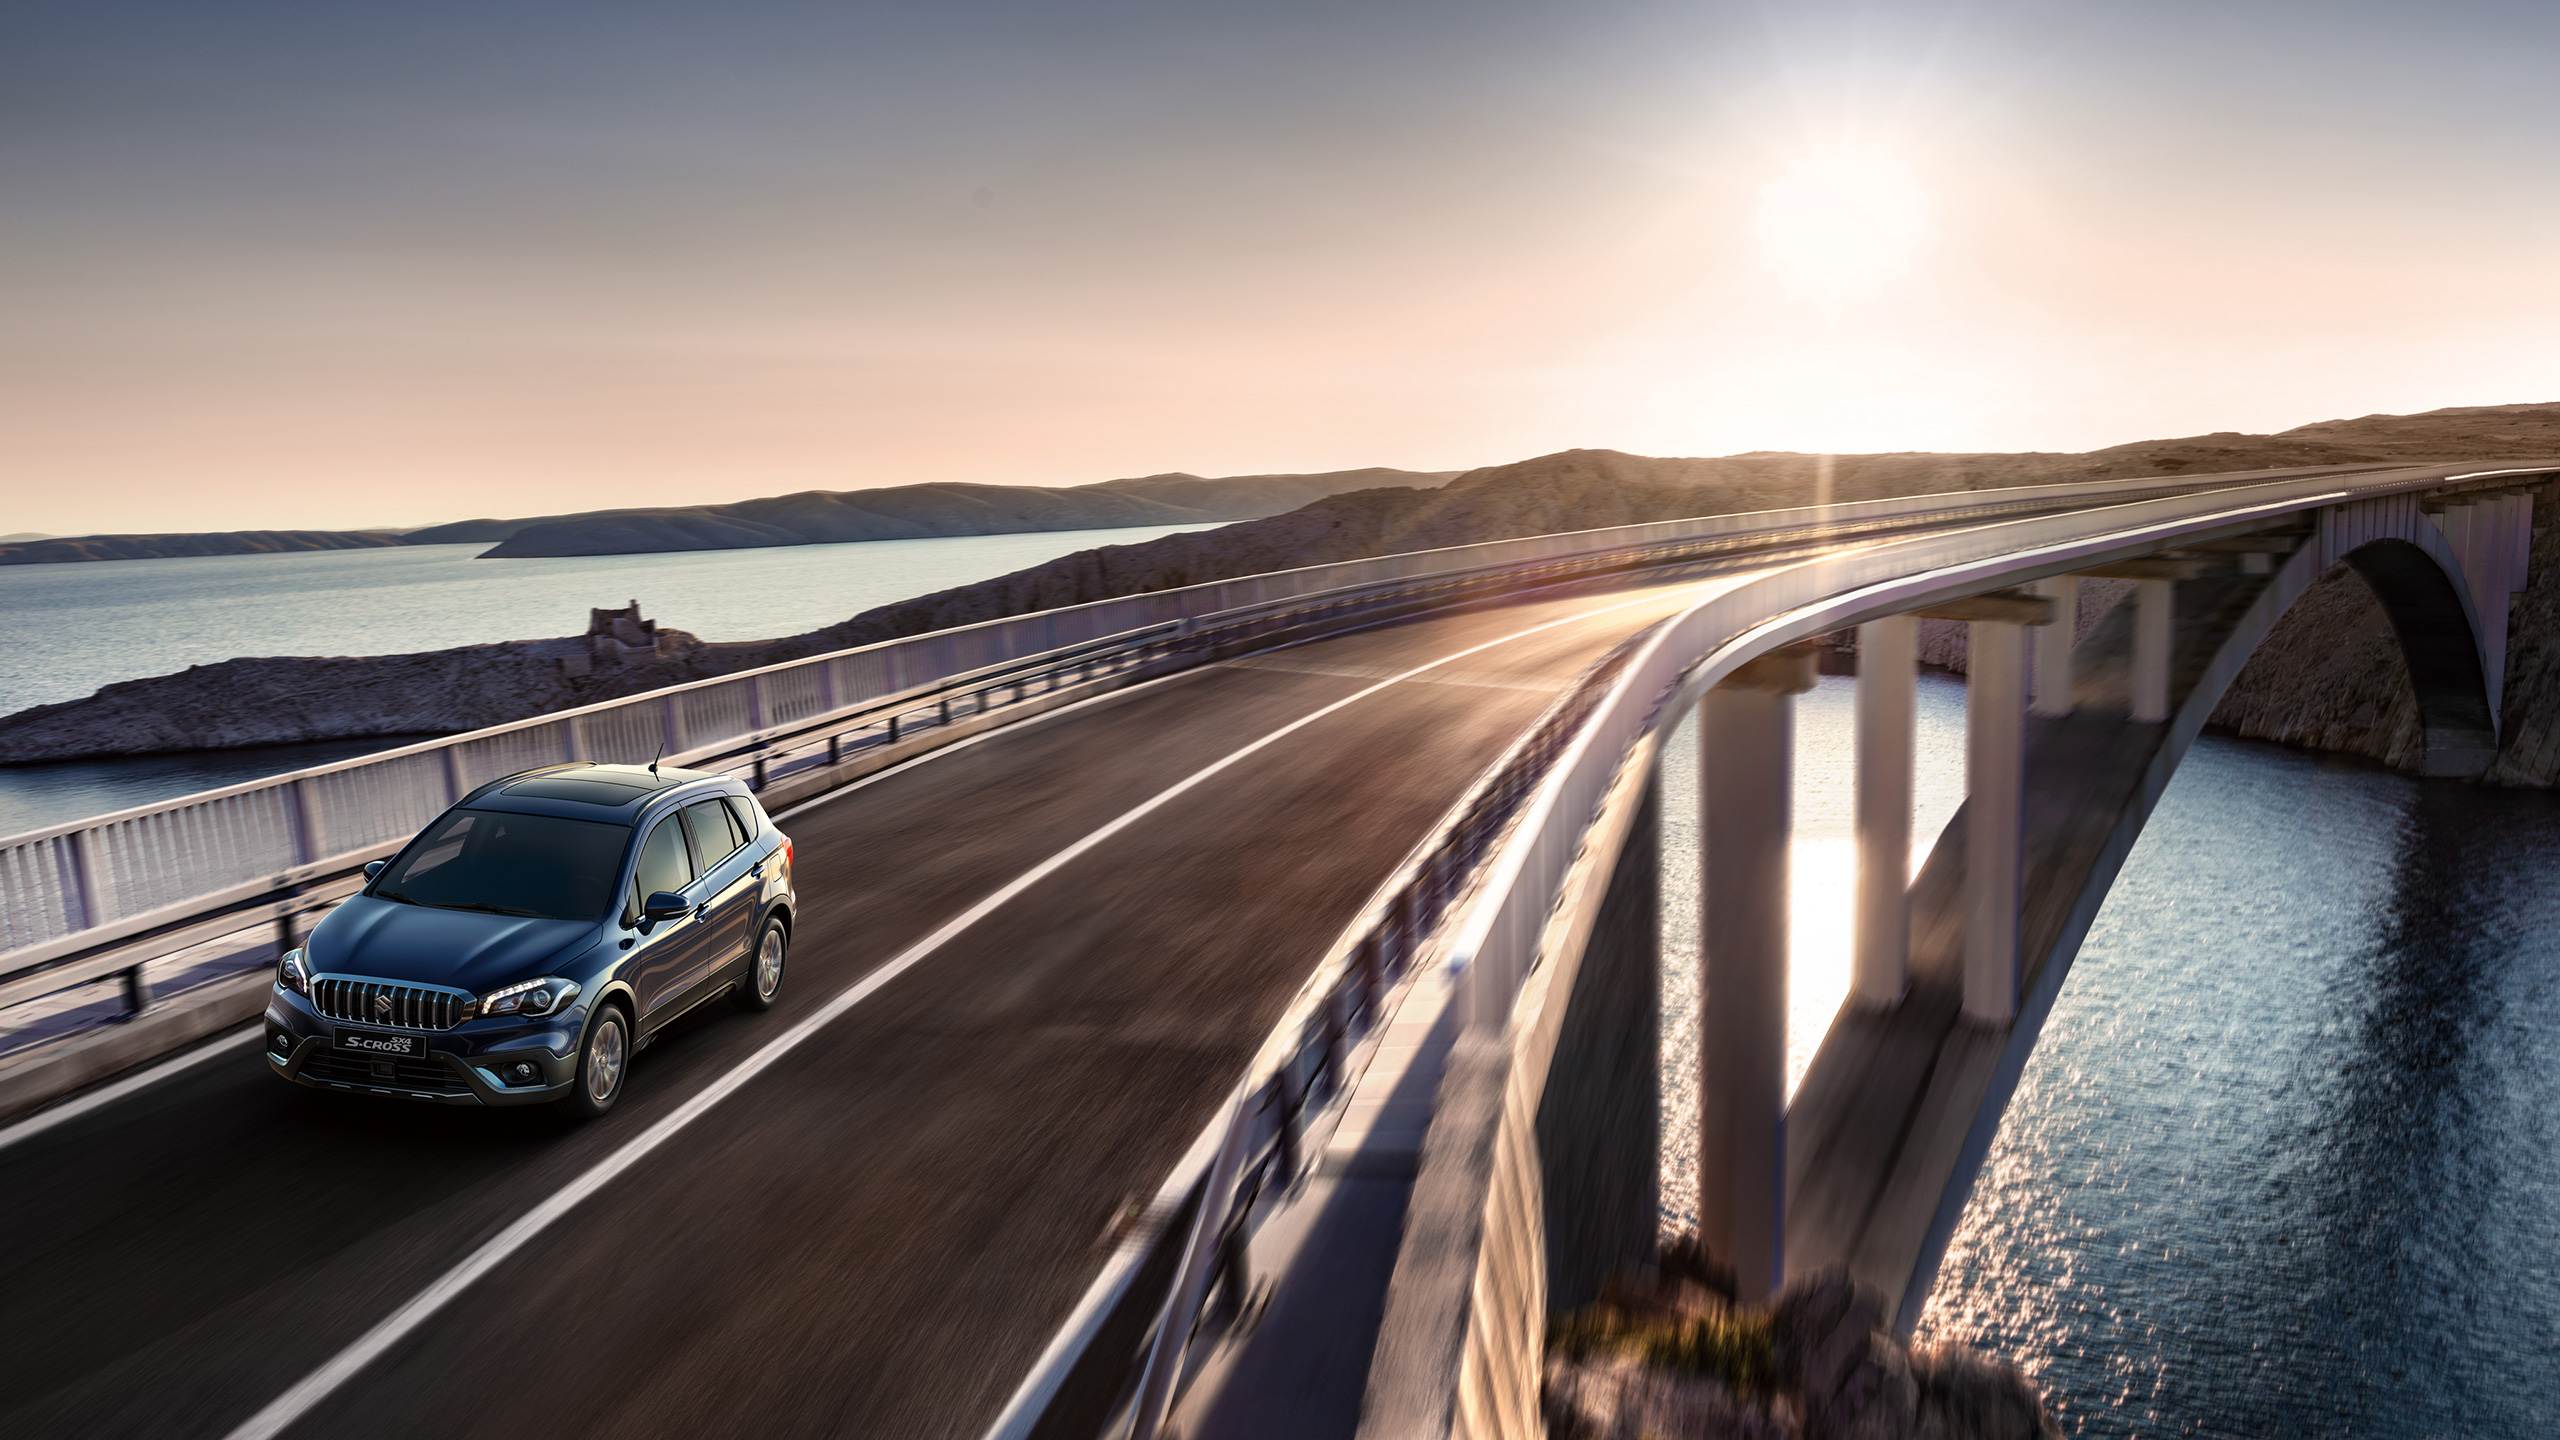 SX4-S-CROSS-driving-on-long-bridge-with-sunset